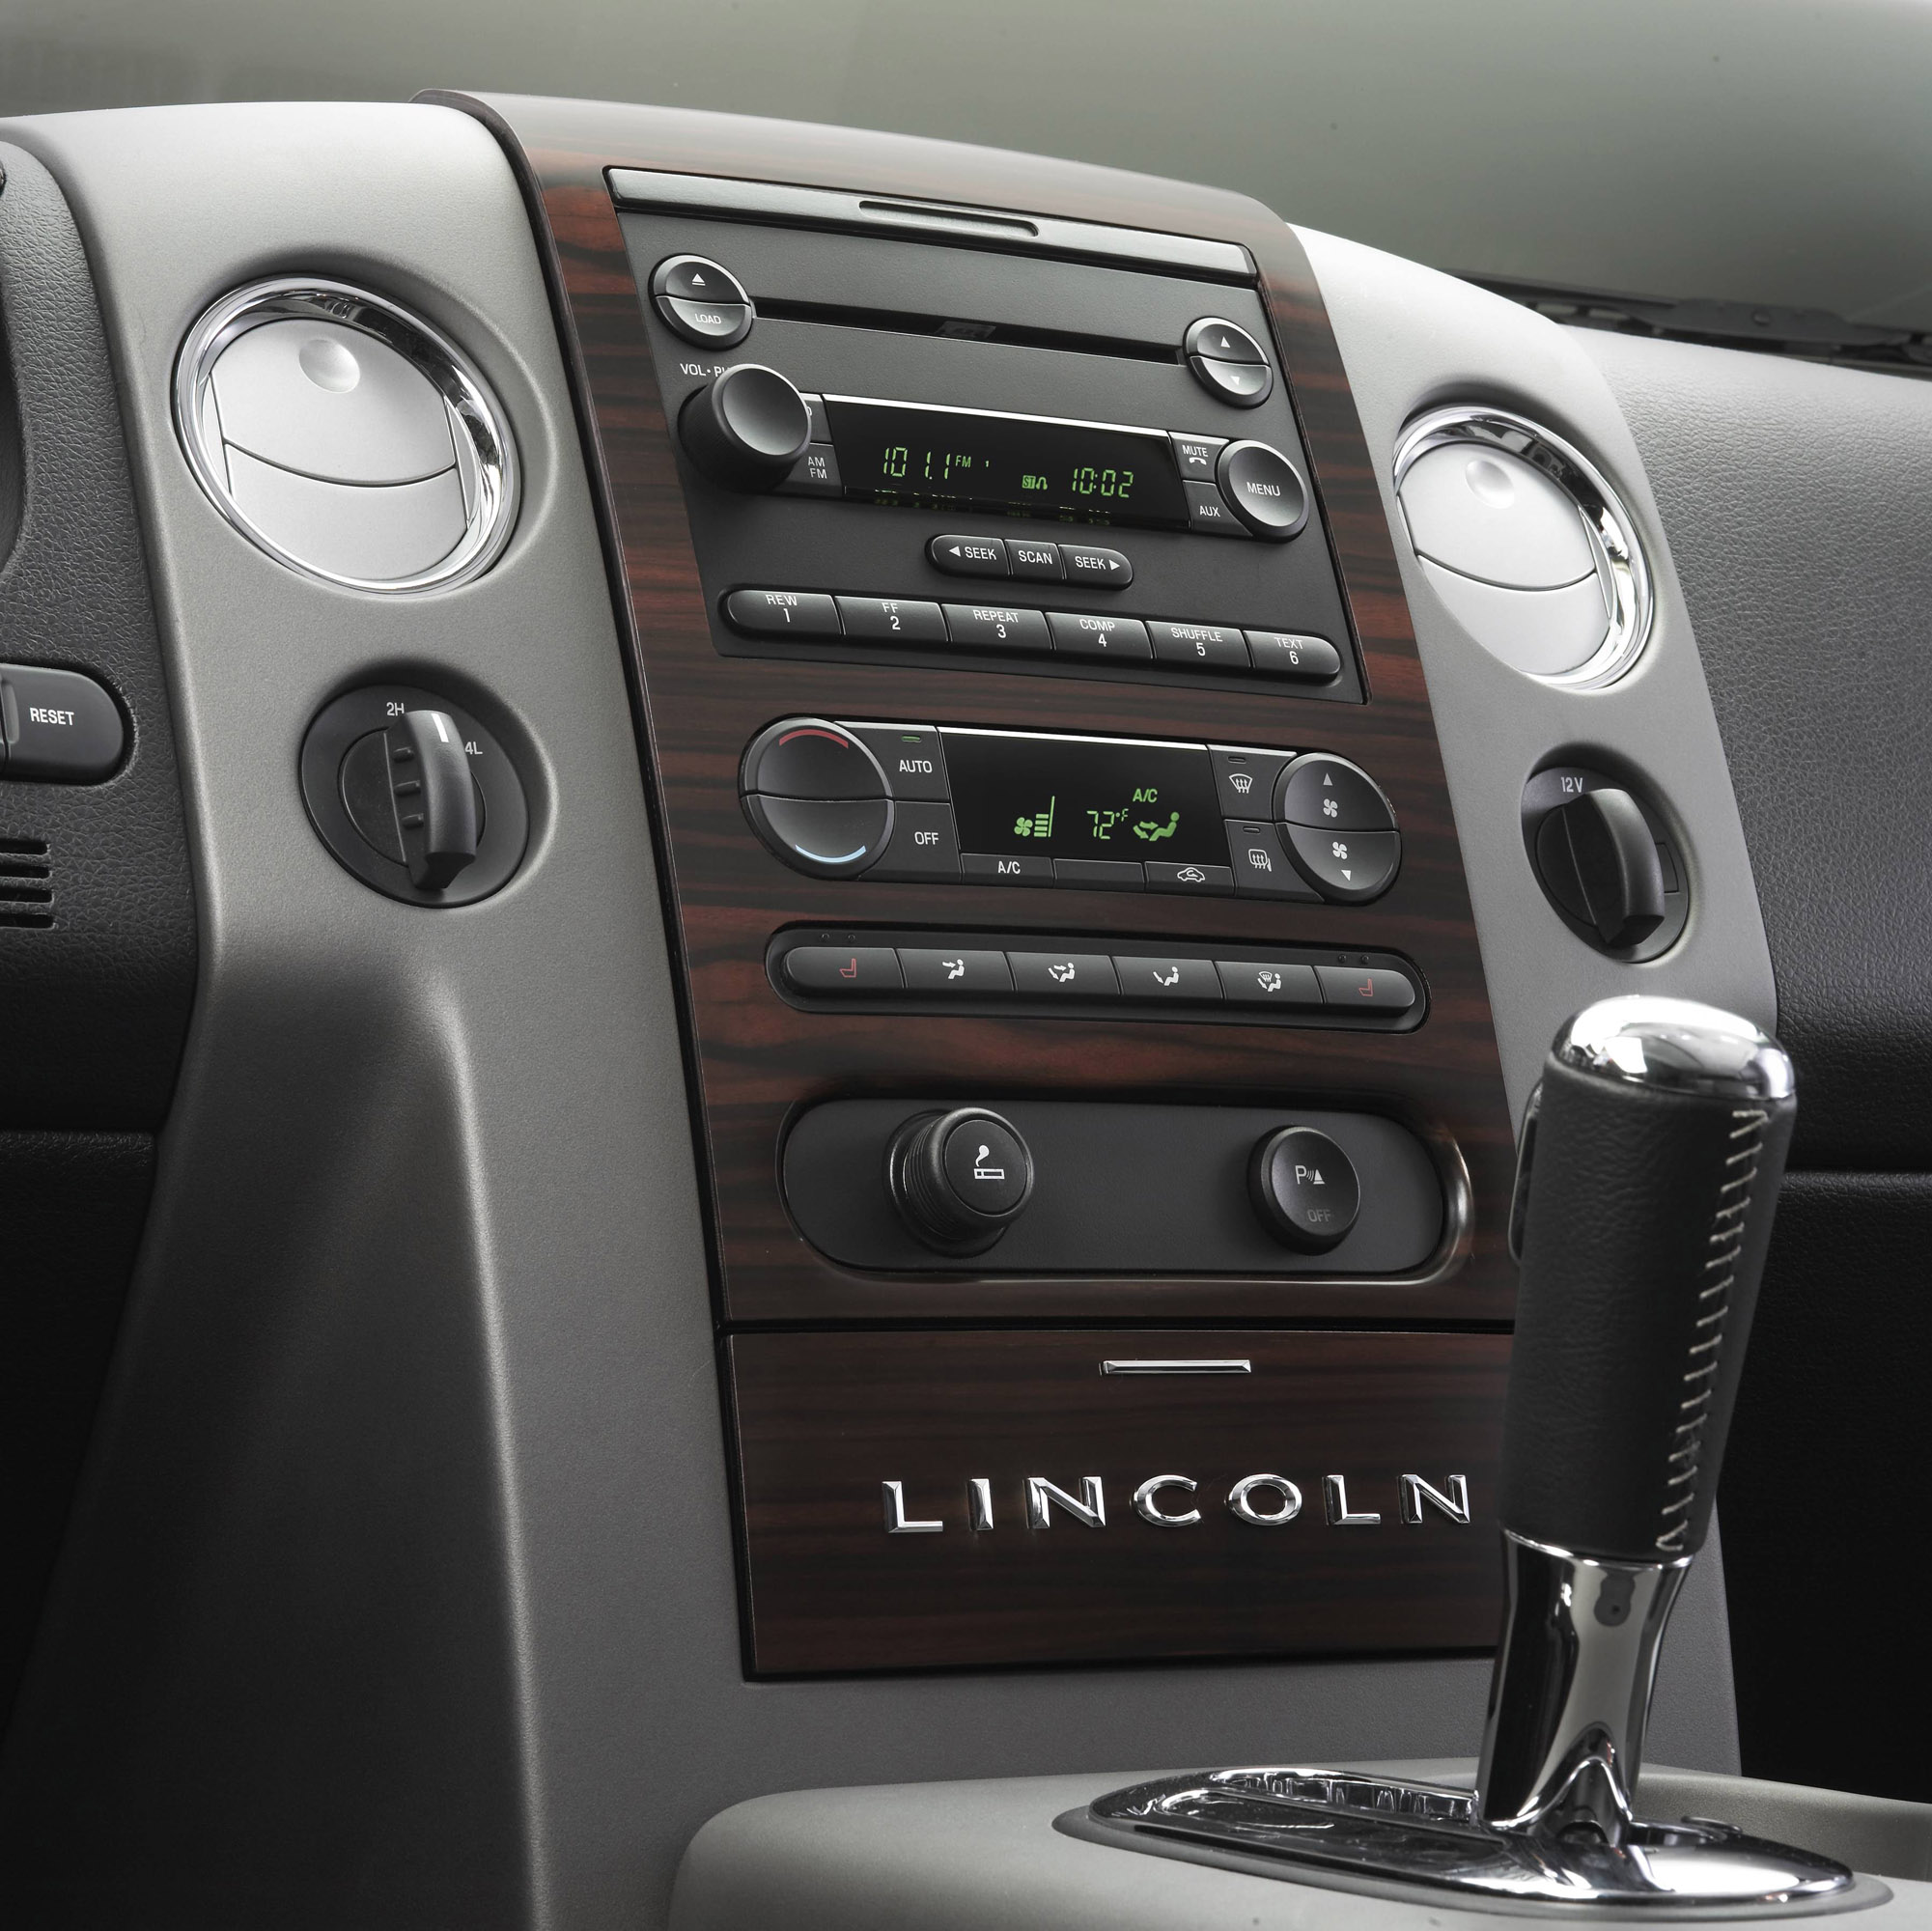 Lincoln Mark LT Concept